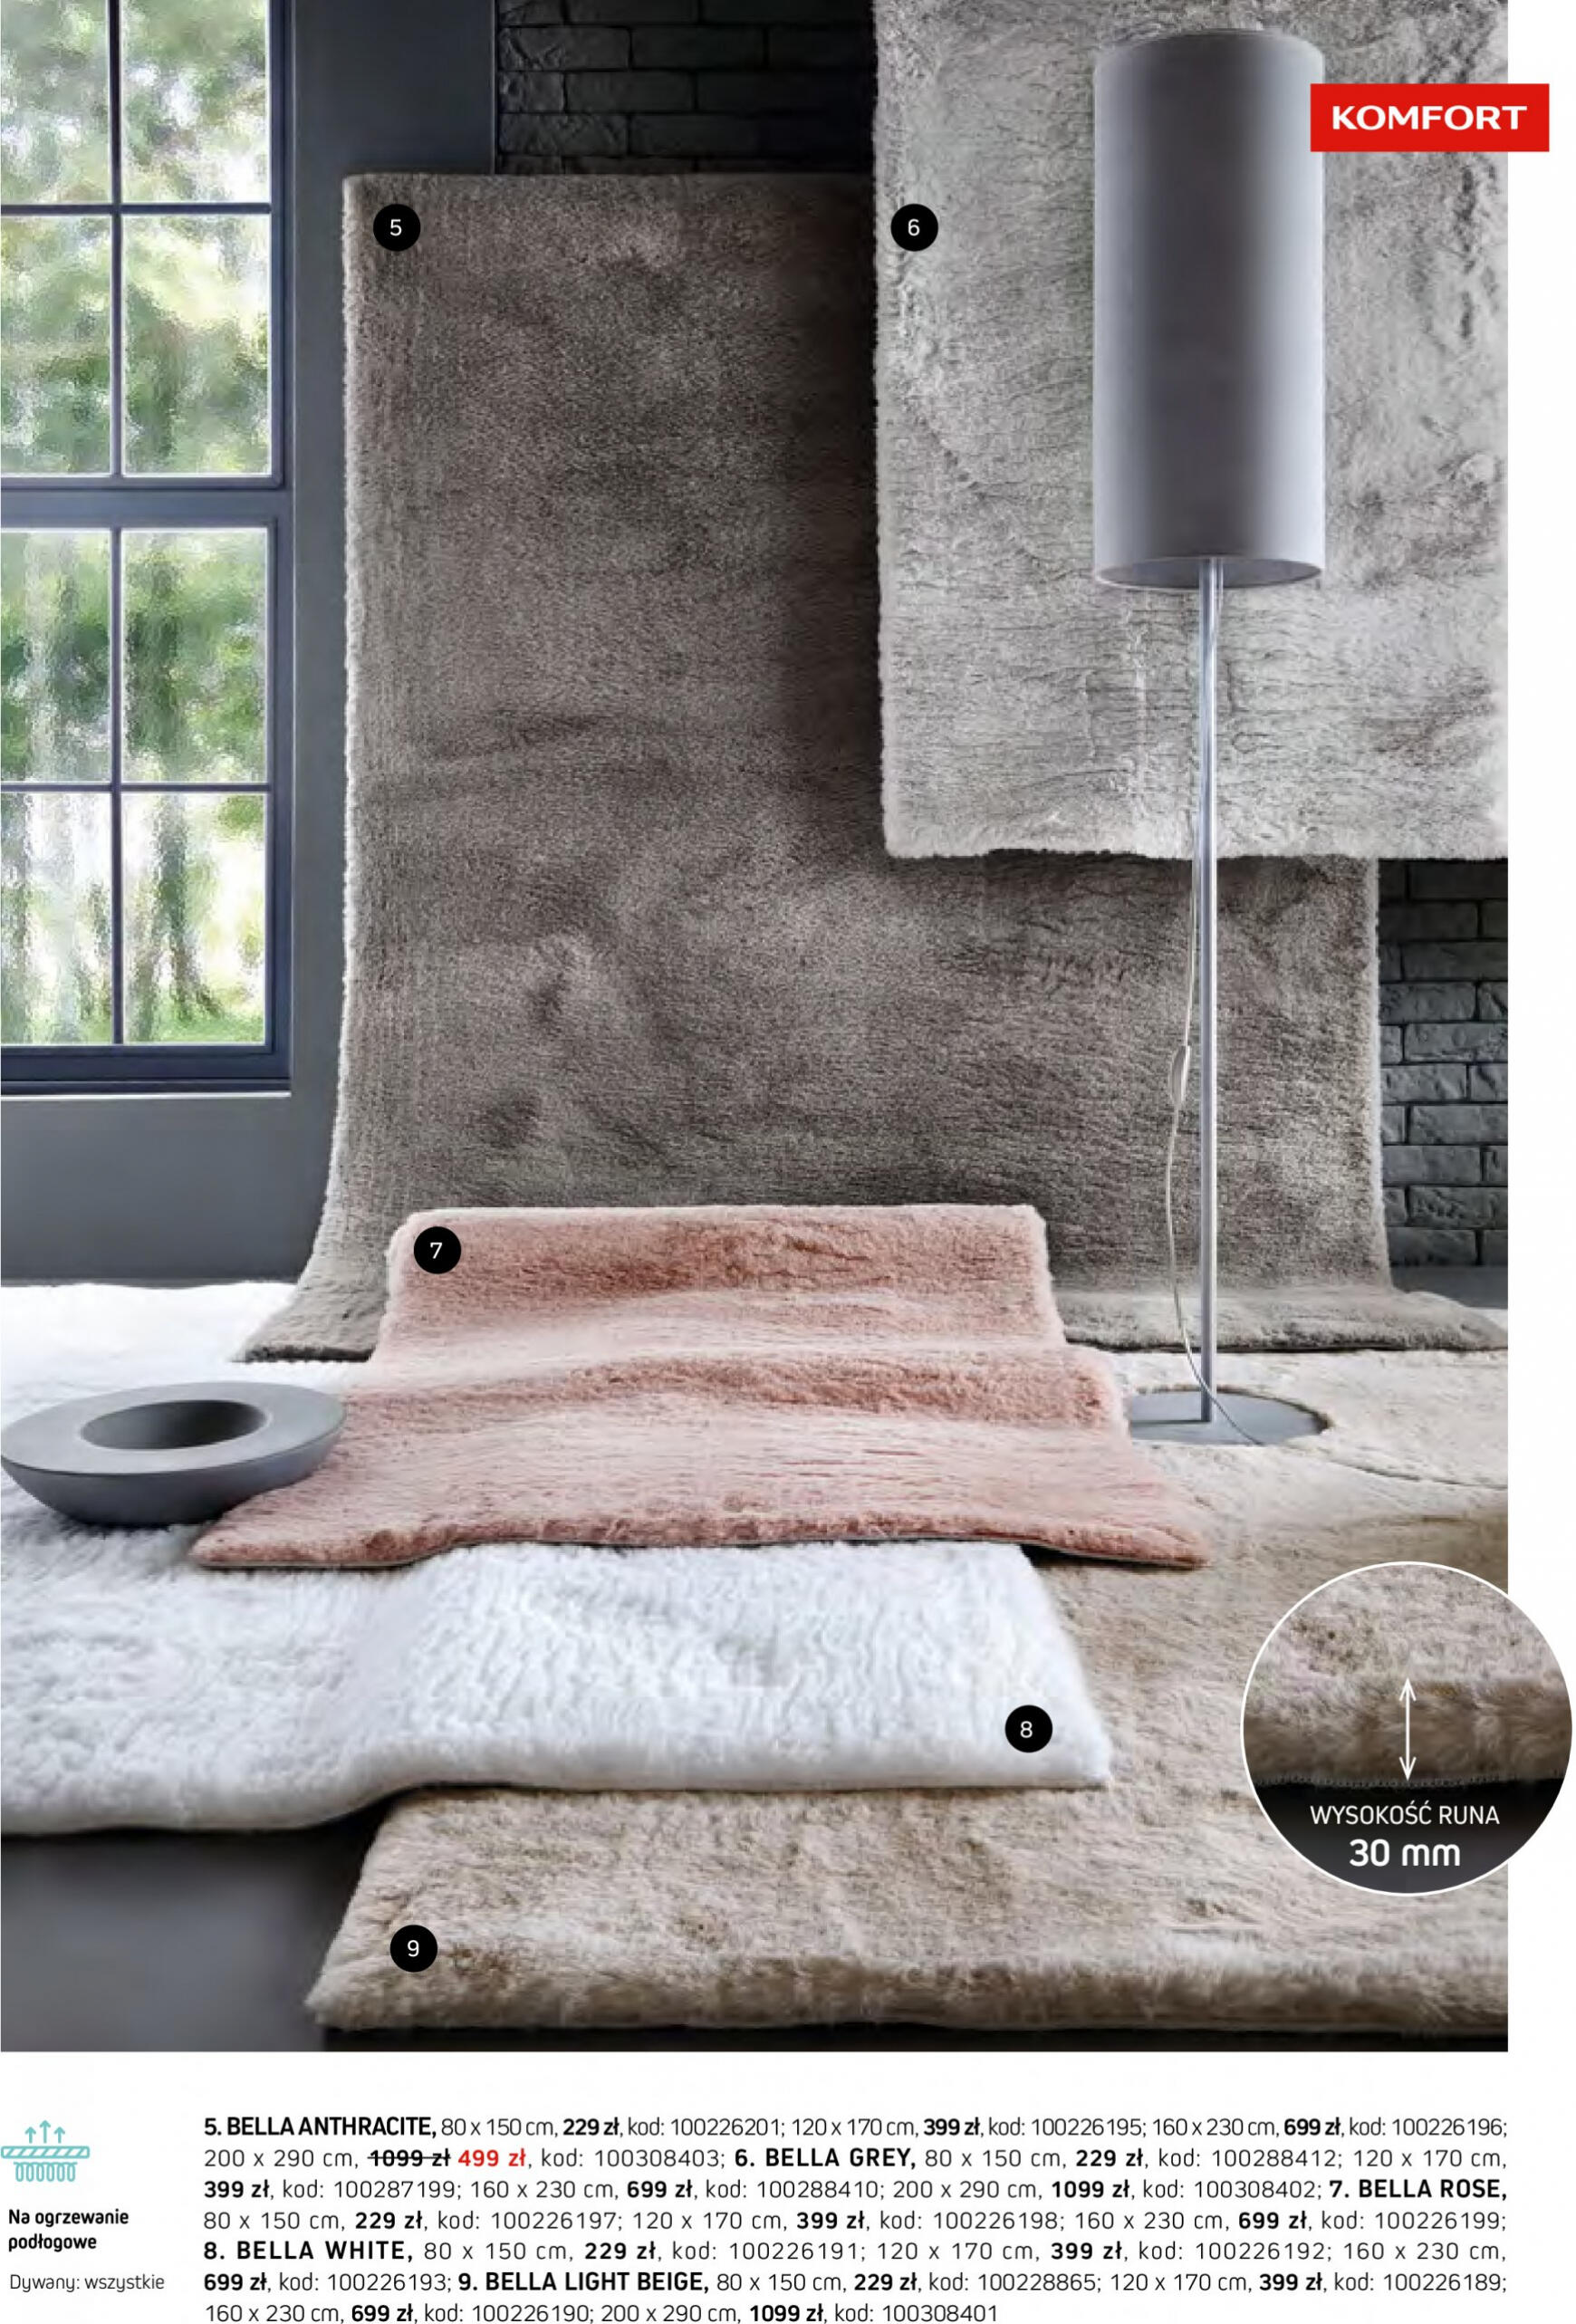 komfort - Komfort - Katalog dywany - page: 55